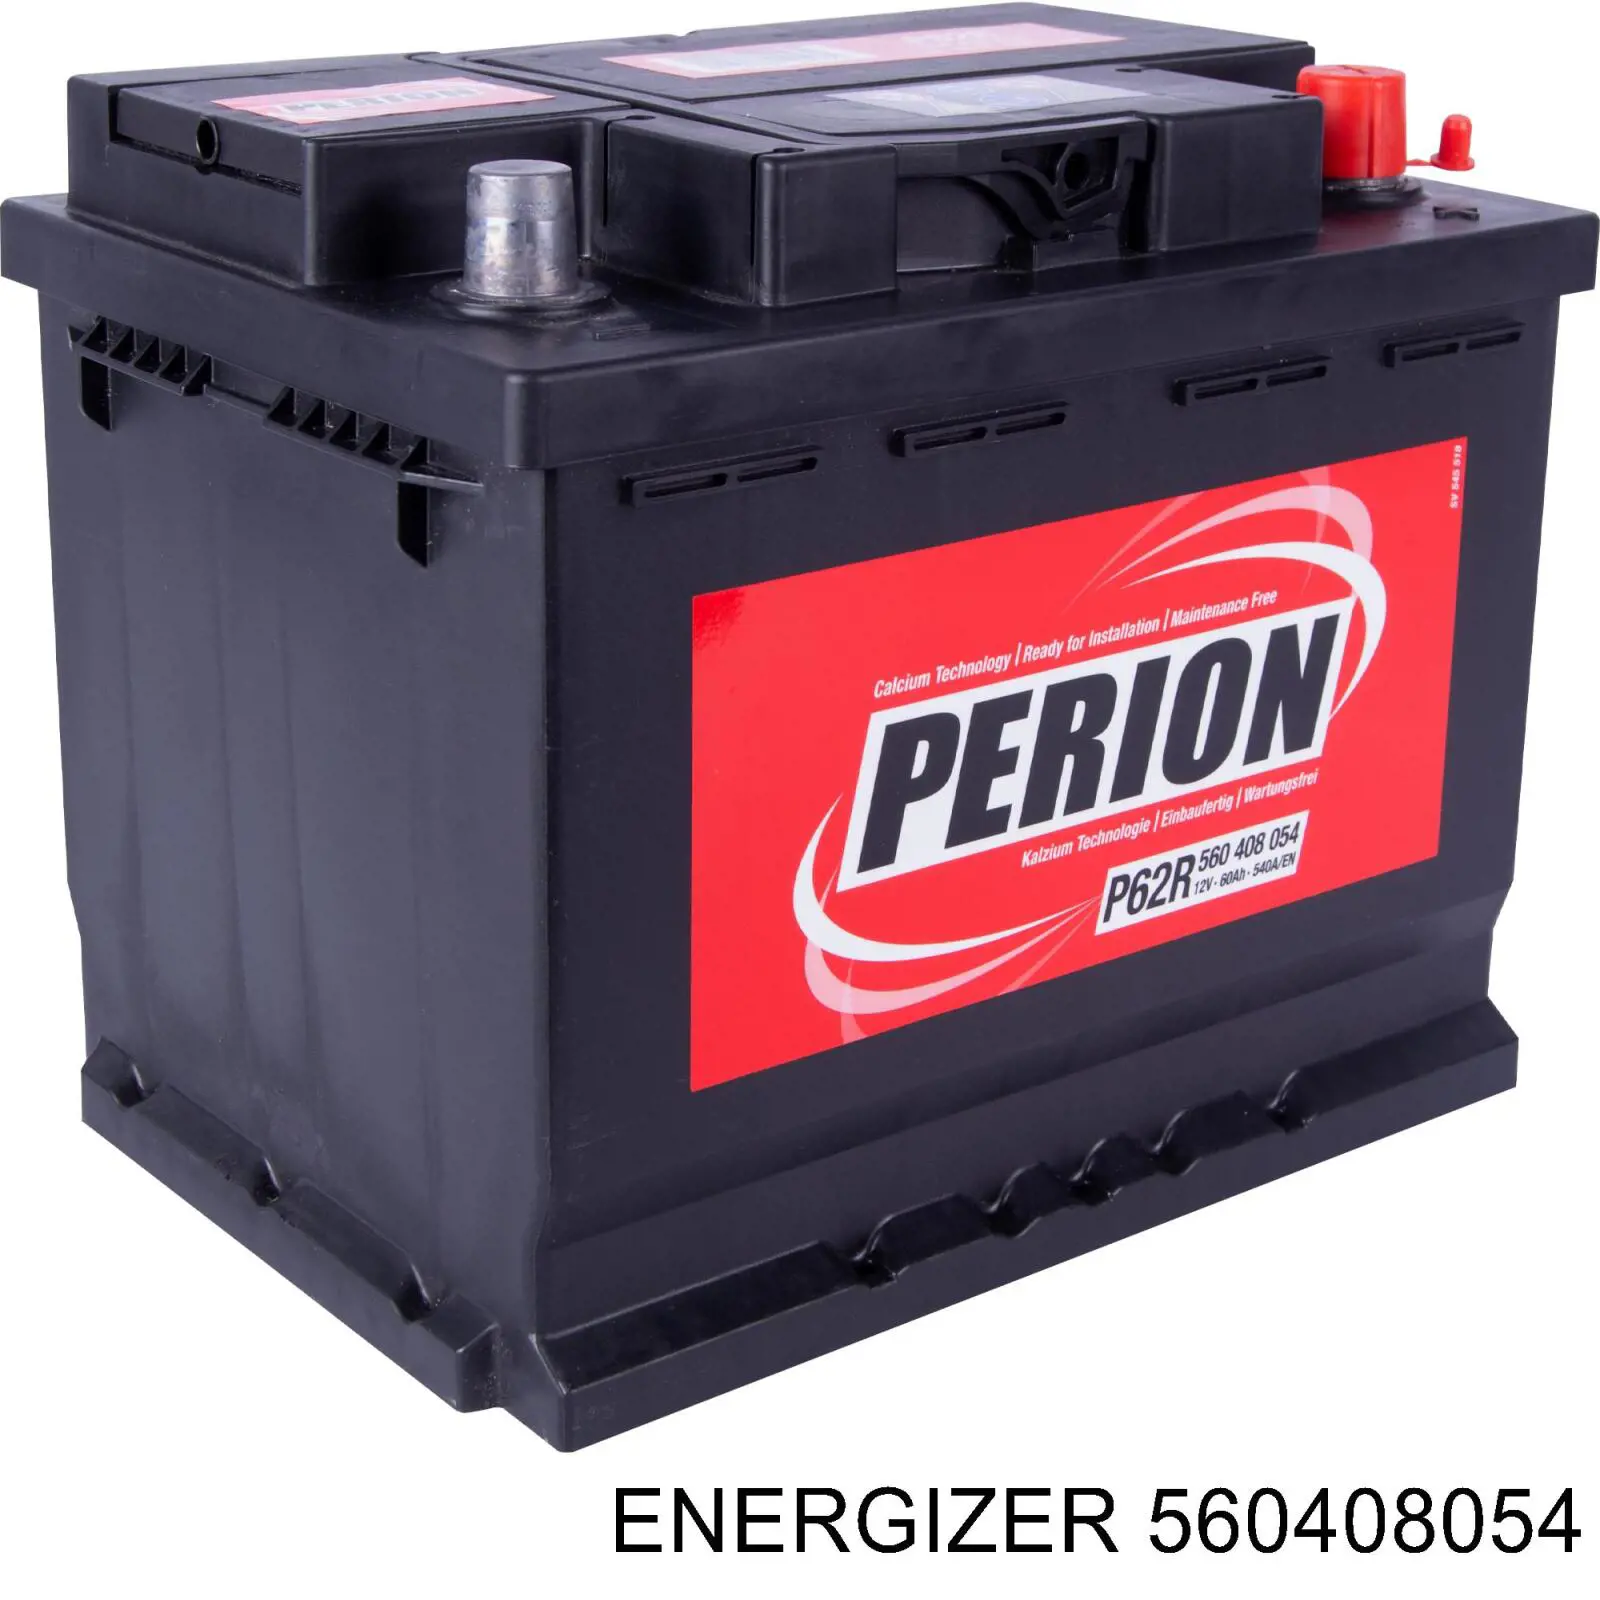 560408054 Energizer акумуляторна батарея, акб